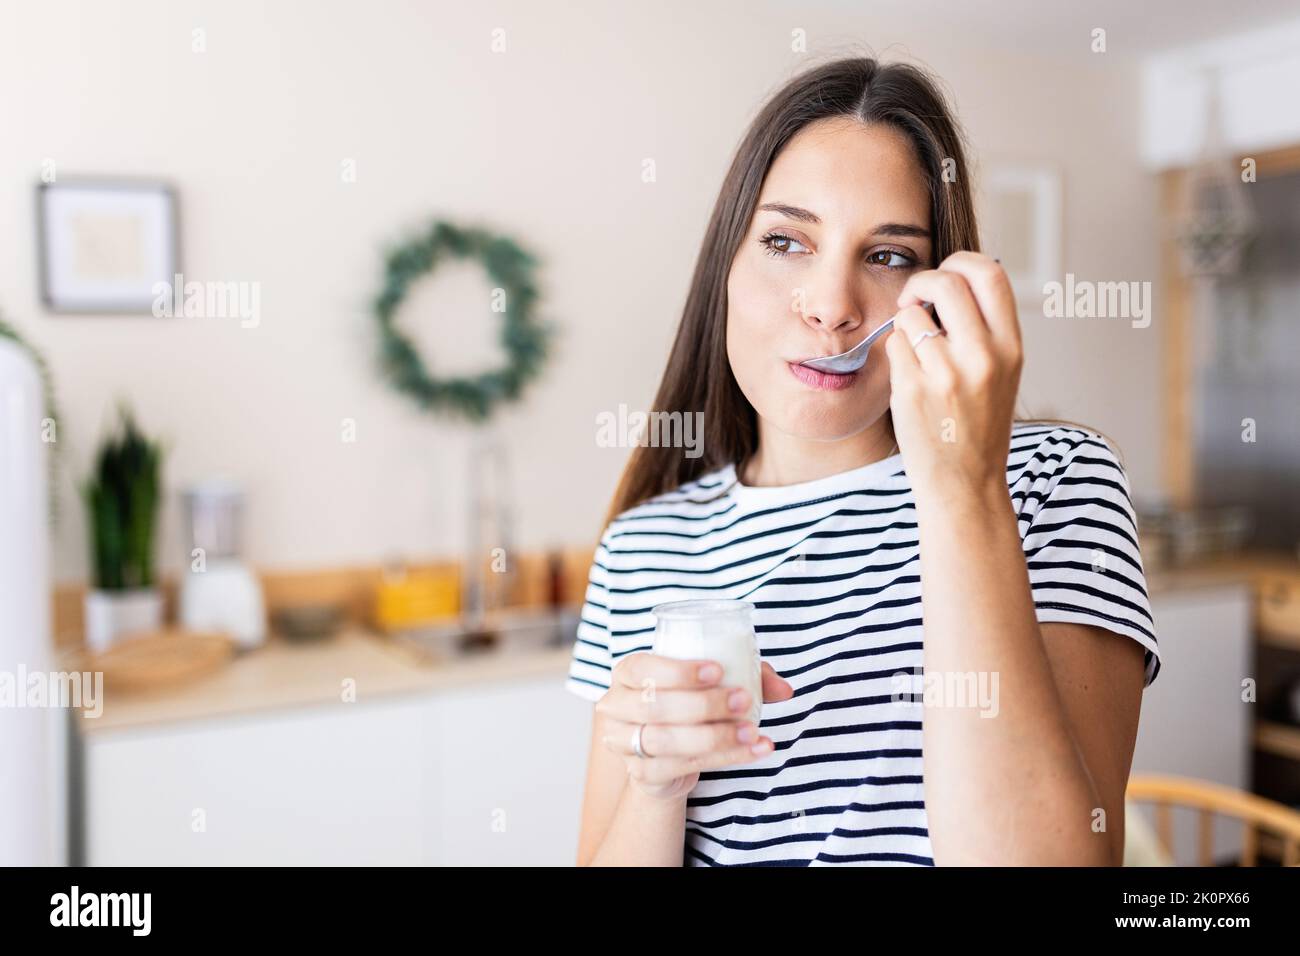 Young woman eating yogurt at home Stock Photo